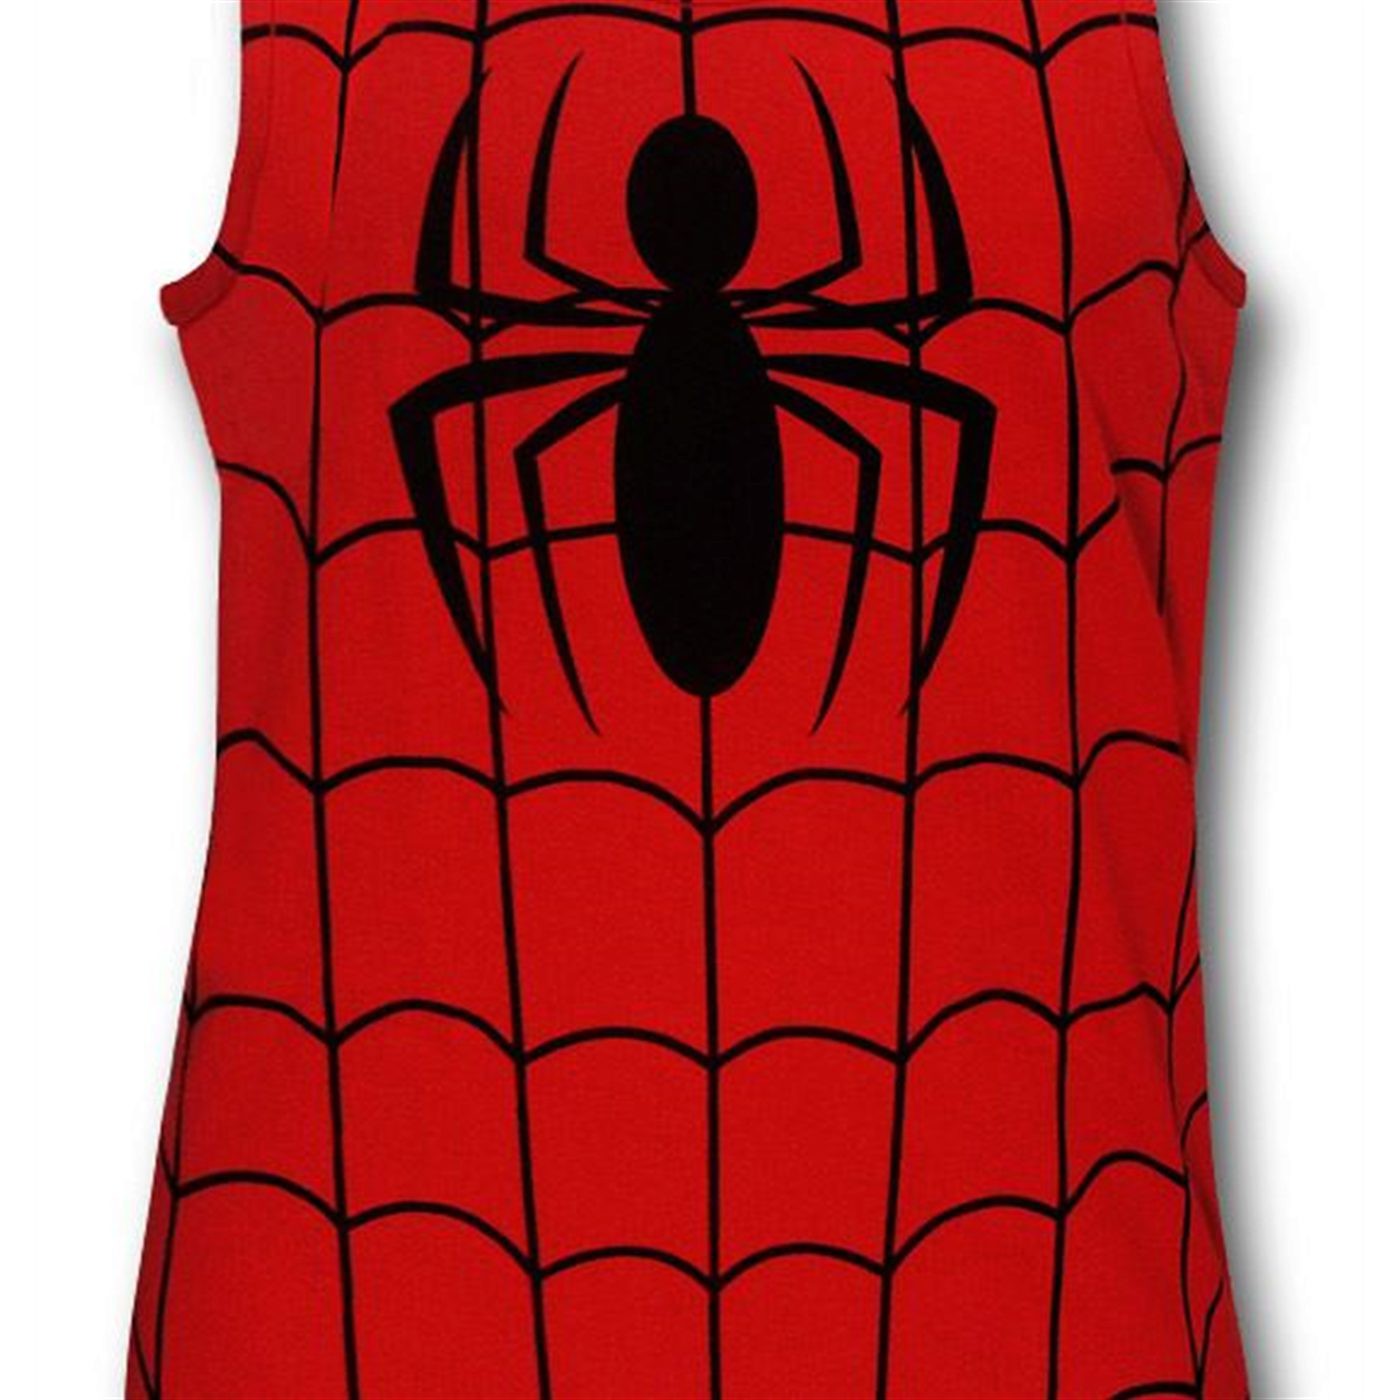 Spiderman Costume Tank Top